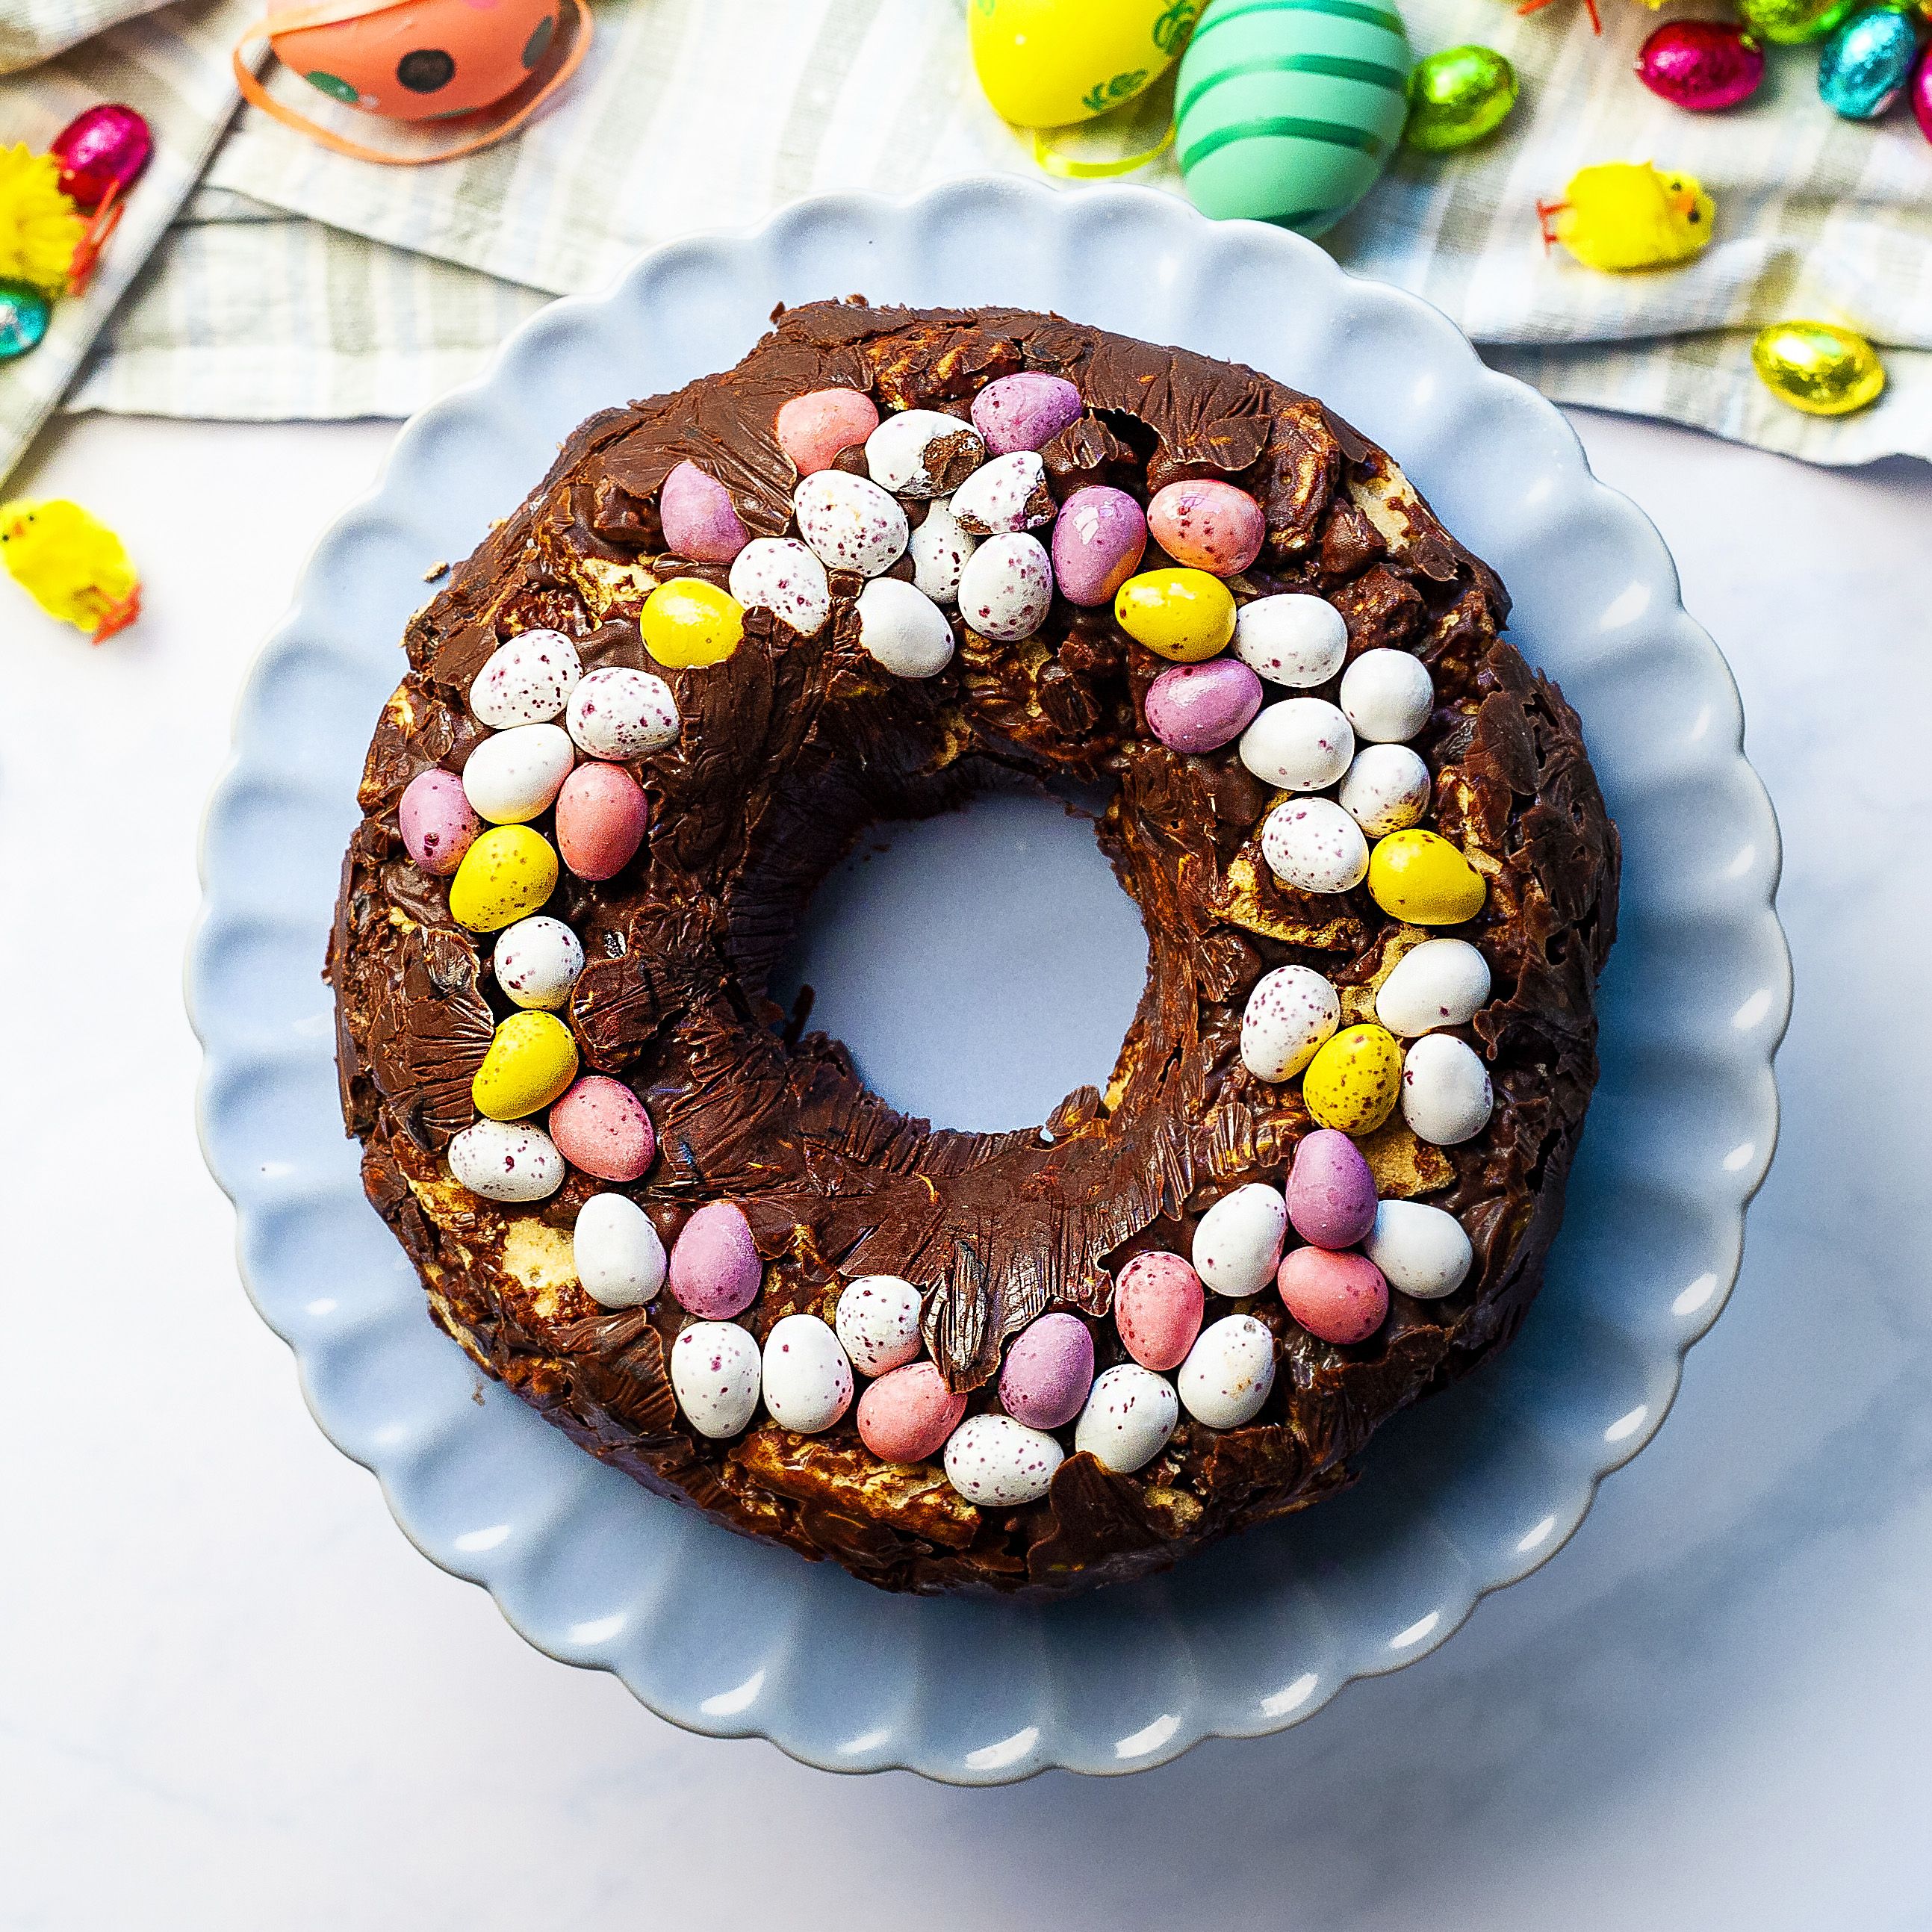 Cadbury Chocolate Cake with Mini Eggs Recipe - What the Redhead said